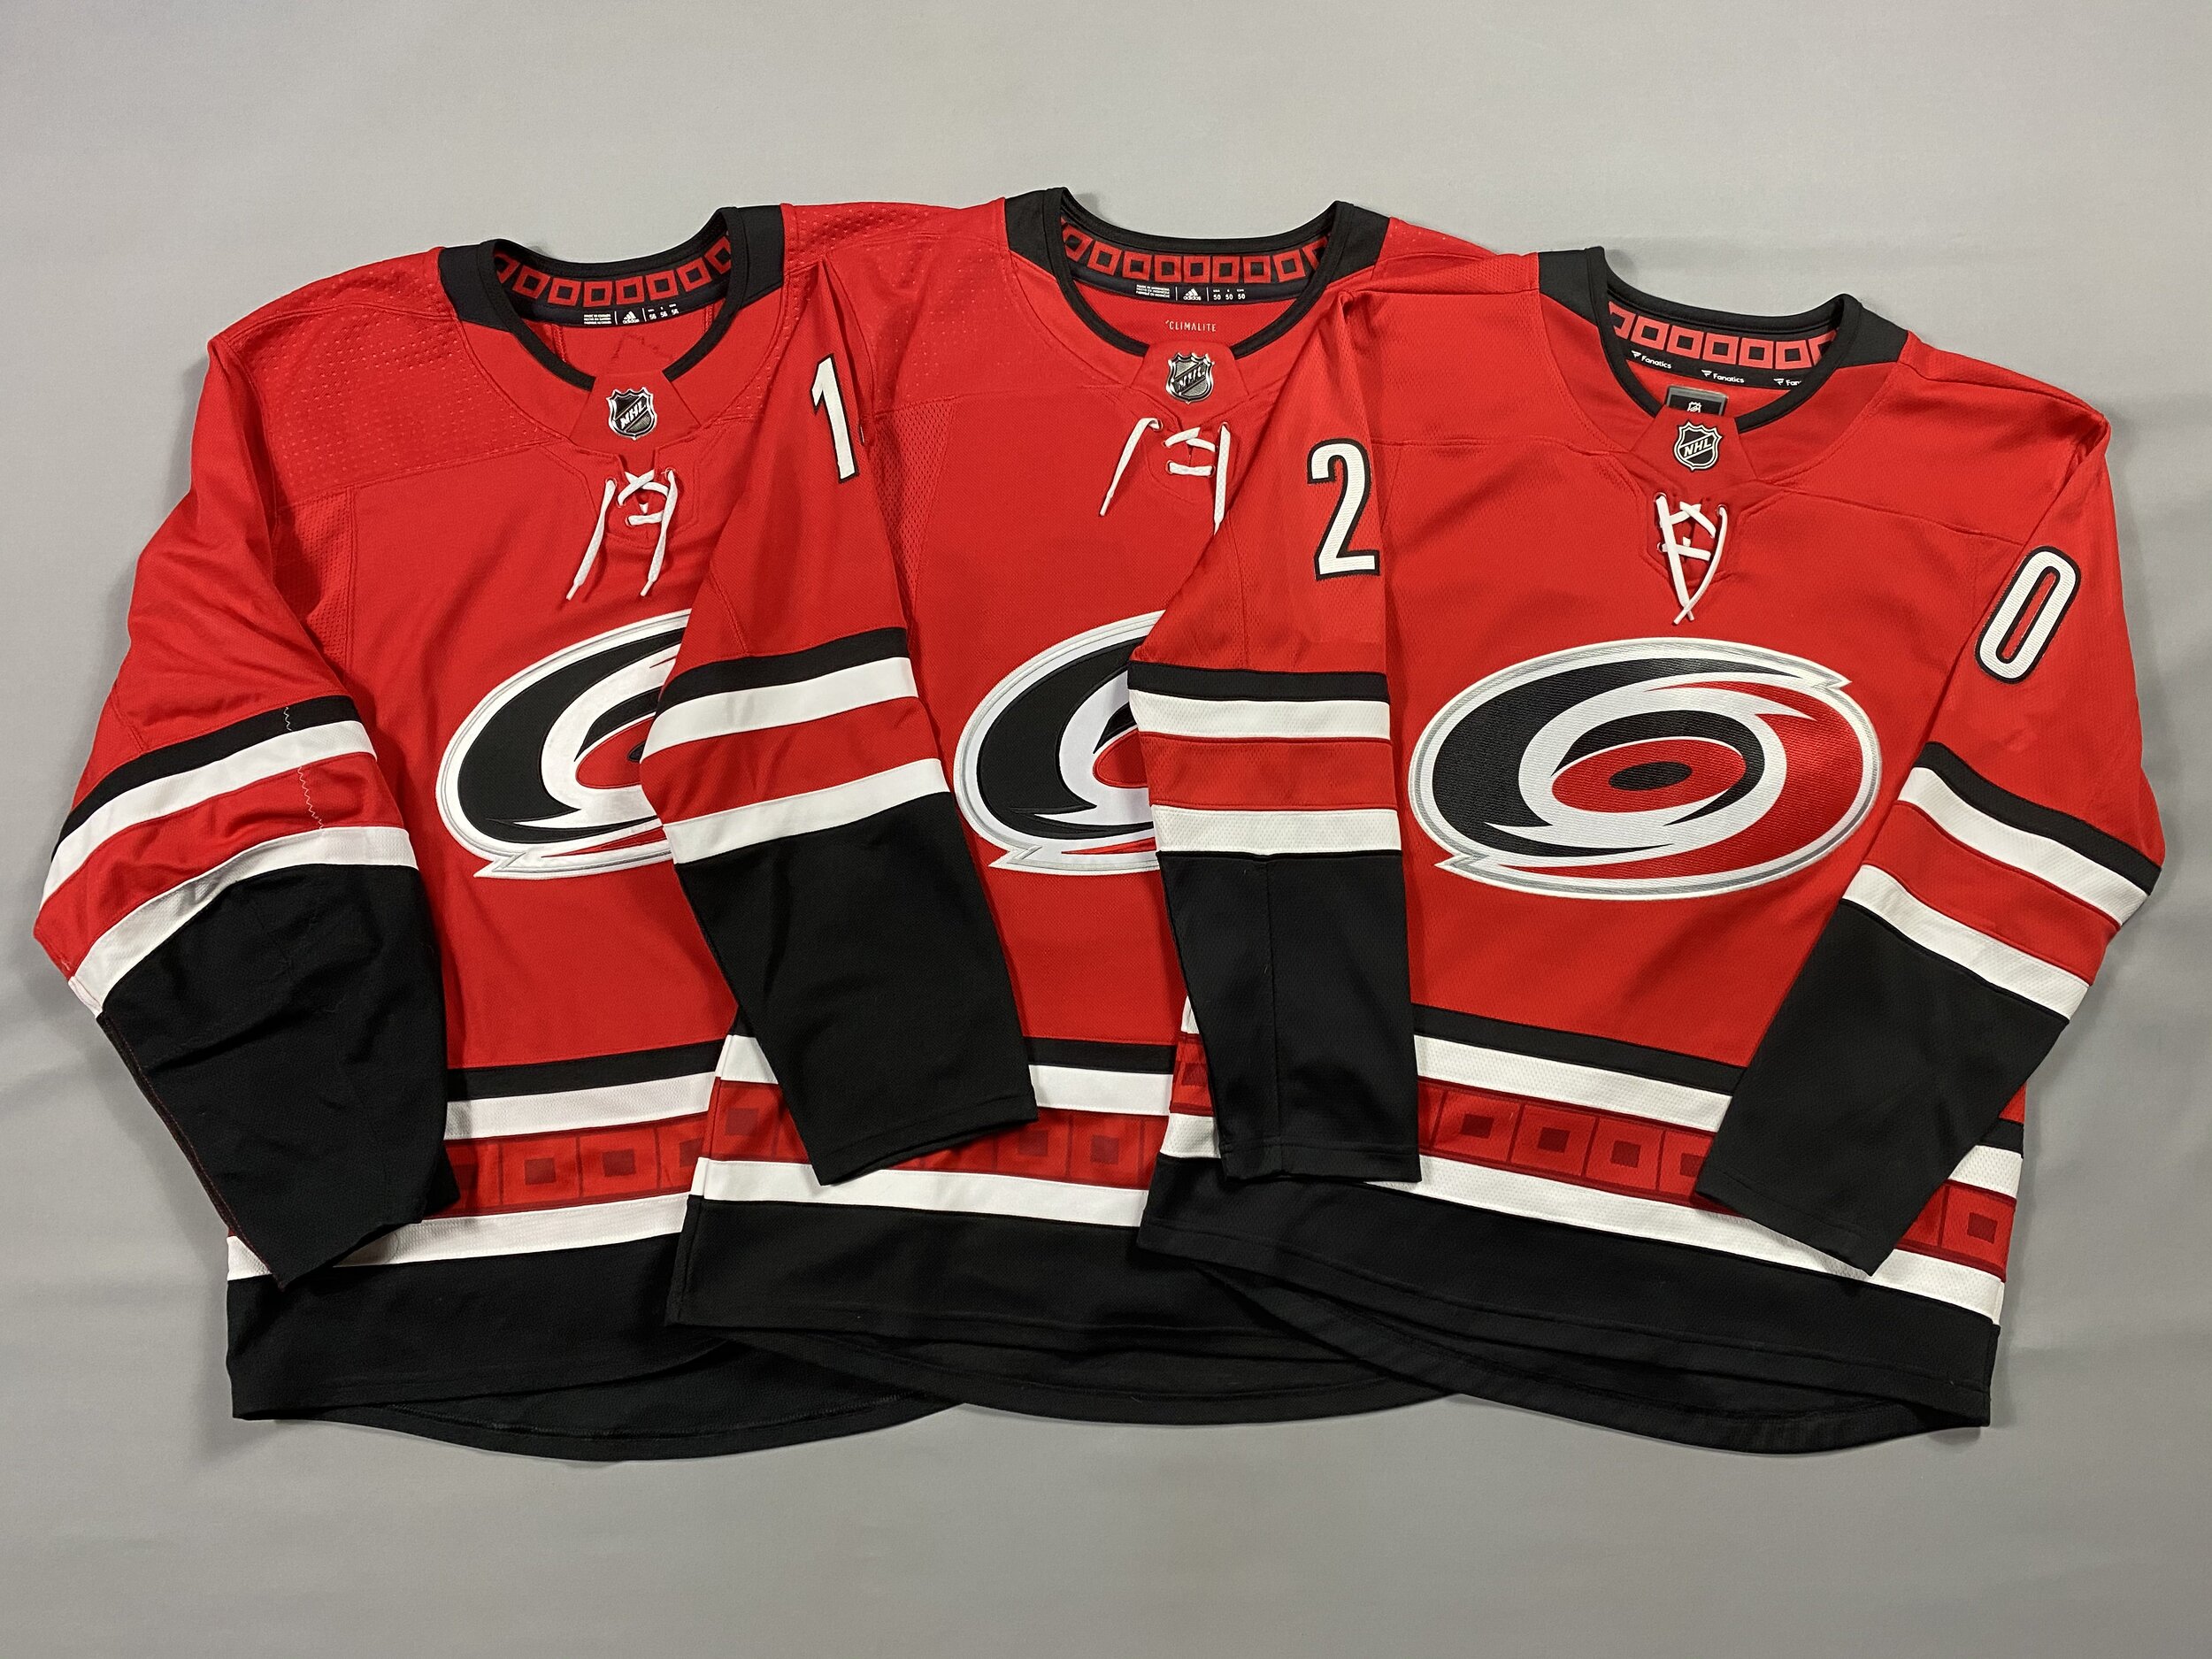 Fanatics to replace Adidas as NHL jersey maker after next season